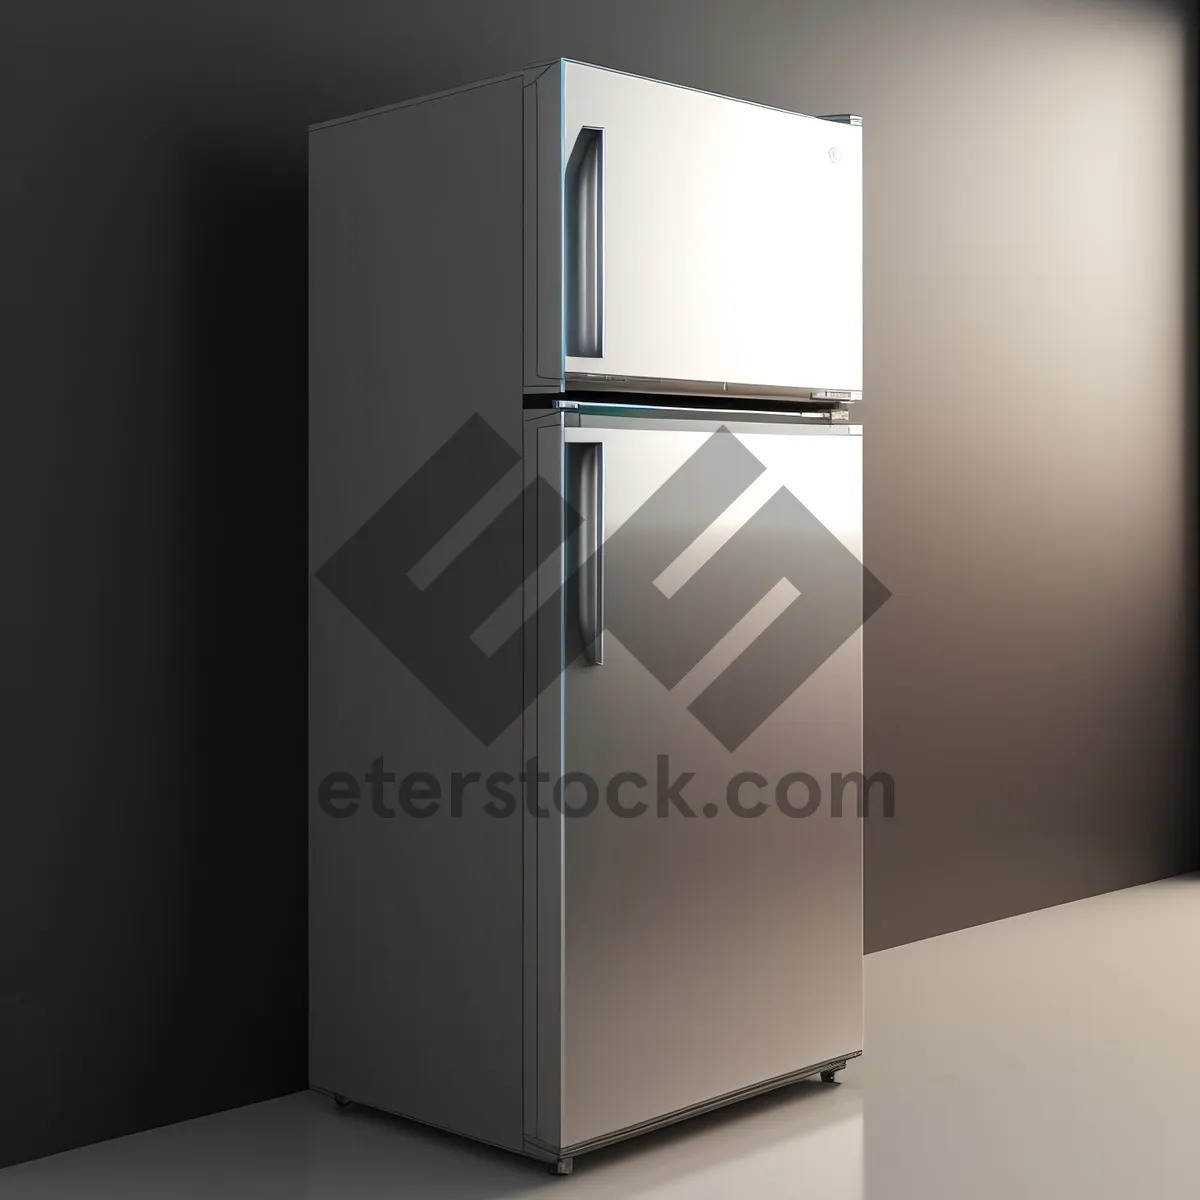 Picture of Modern Interior White Refrigerator